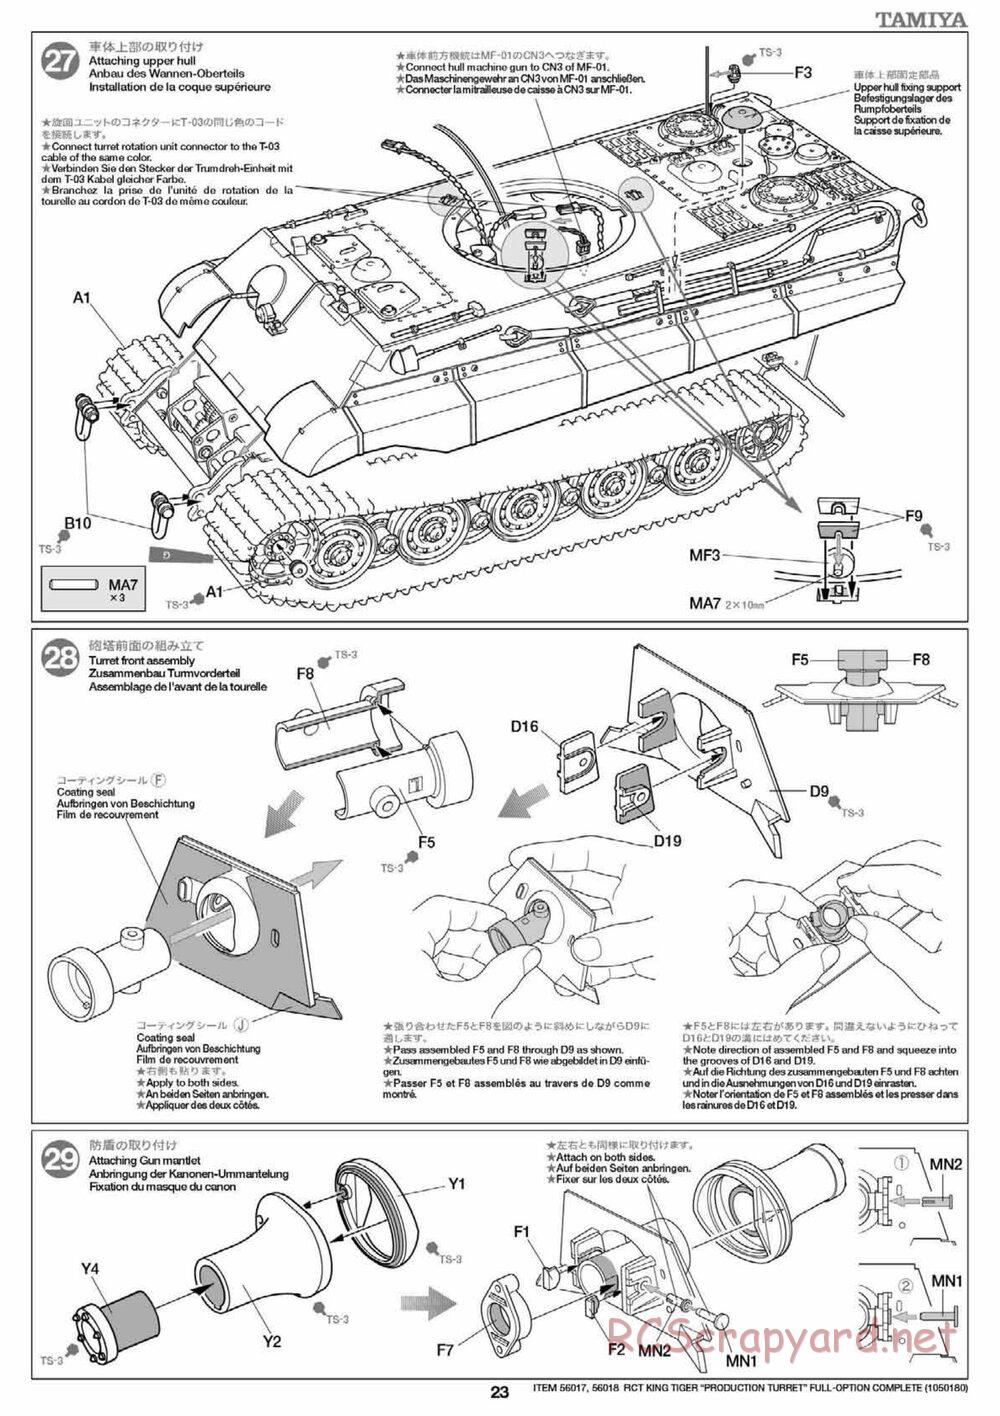 Tamiya - King Tiger - 1/16 Scale Chassis - Manual - Page 23